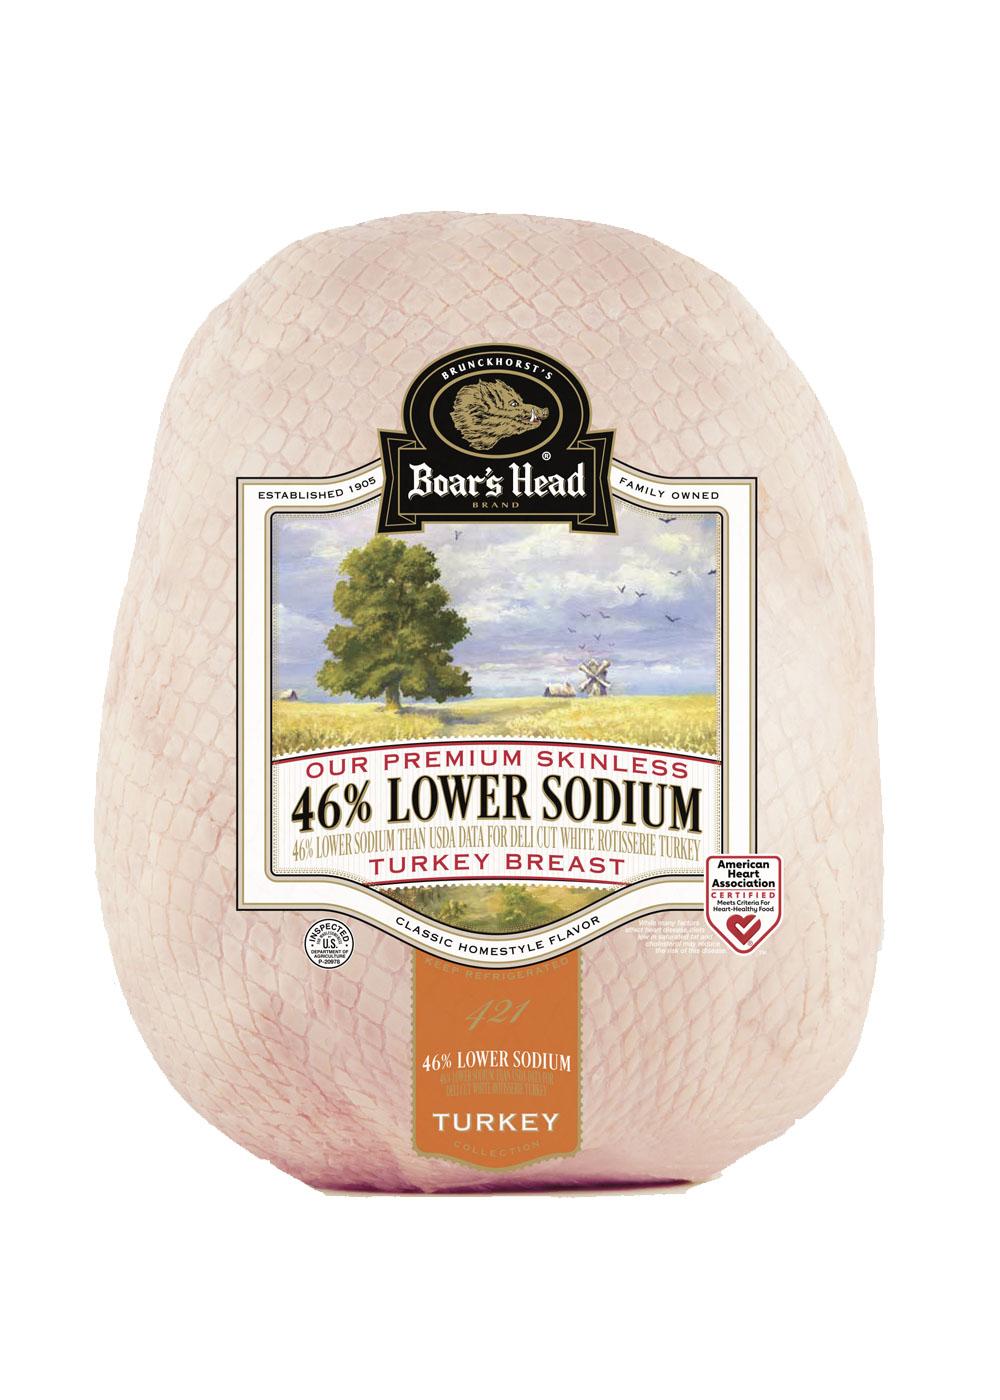 Boar's Head 46% Lower Sodium Turkey Breast; image 1 of 2